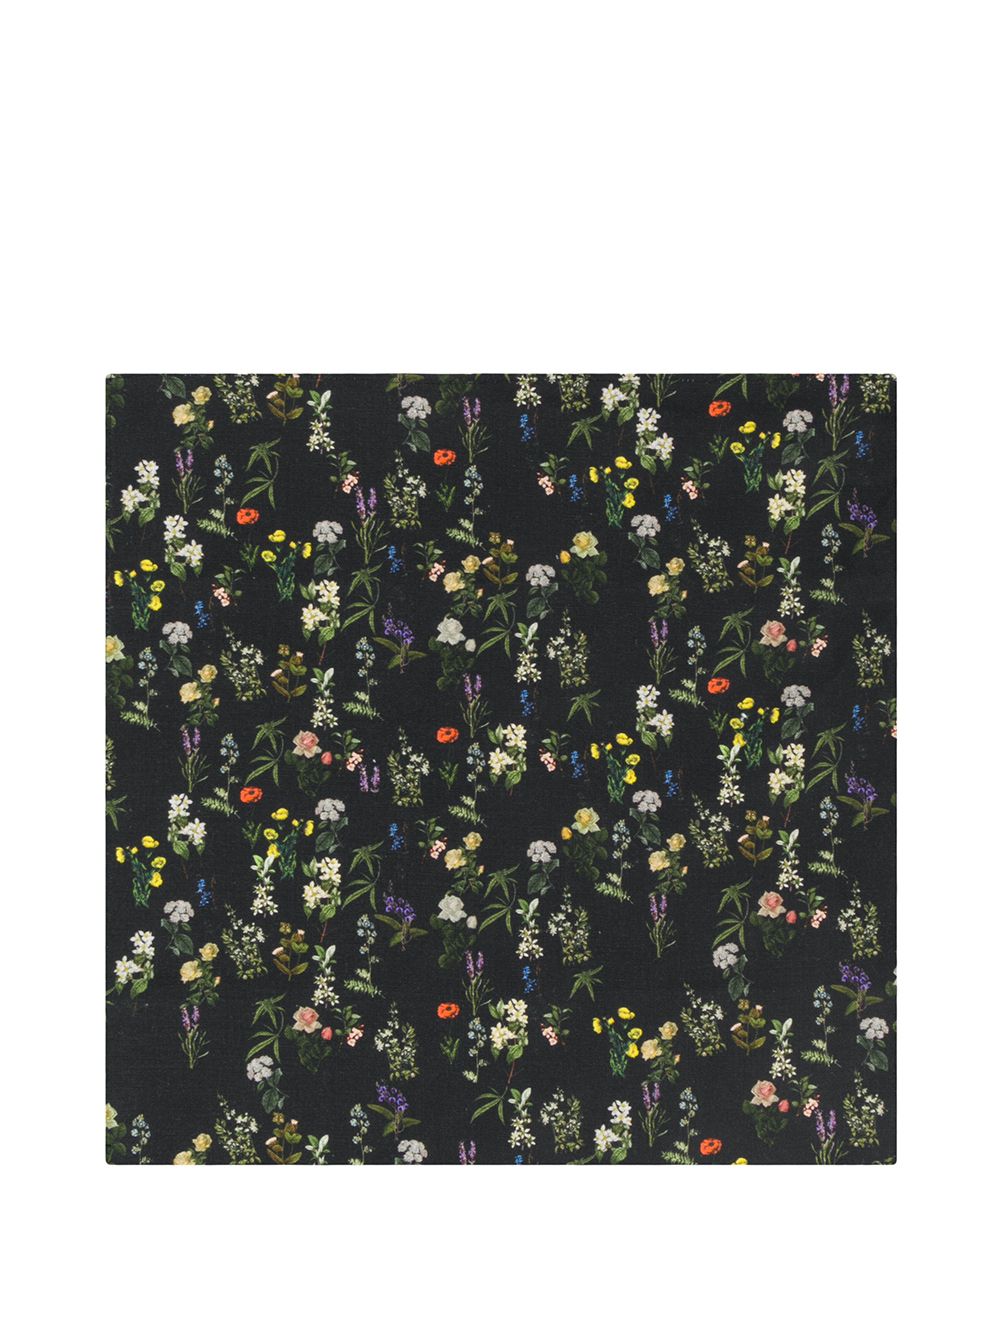 фото Preen by thornton bregazzi упаковка салфеток с цветочным принтом